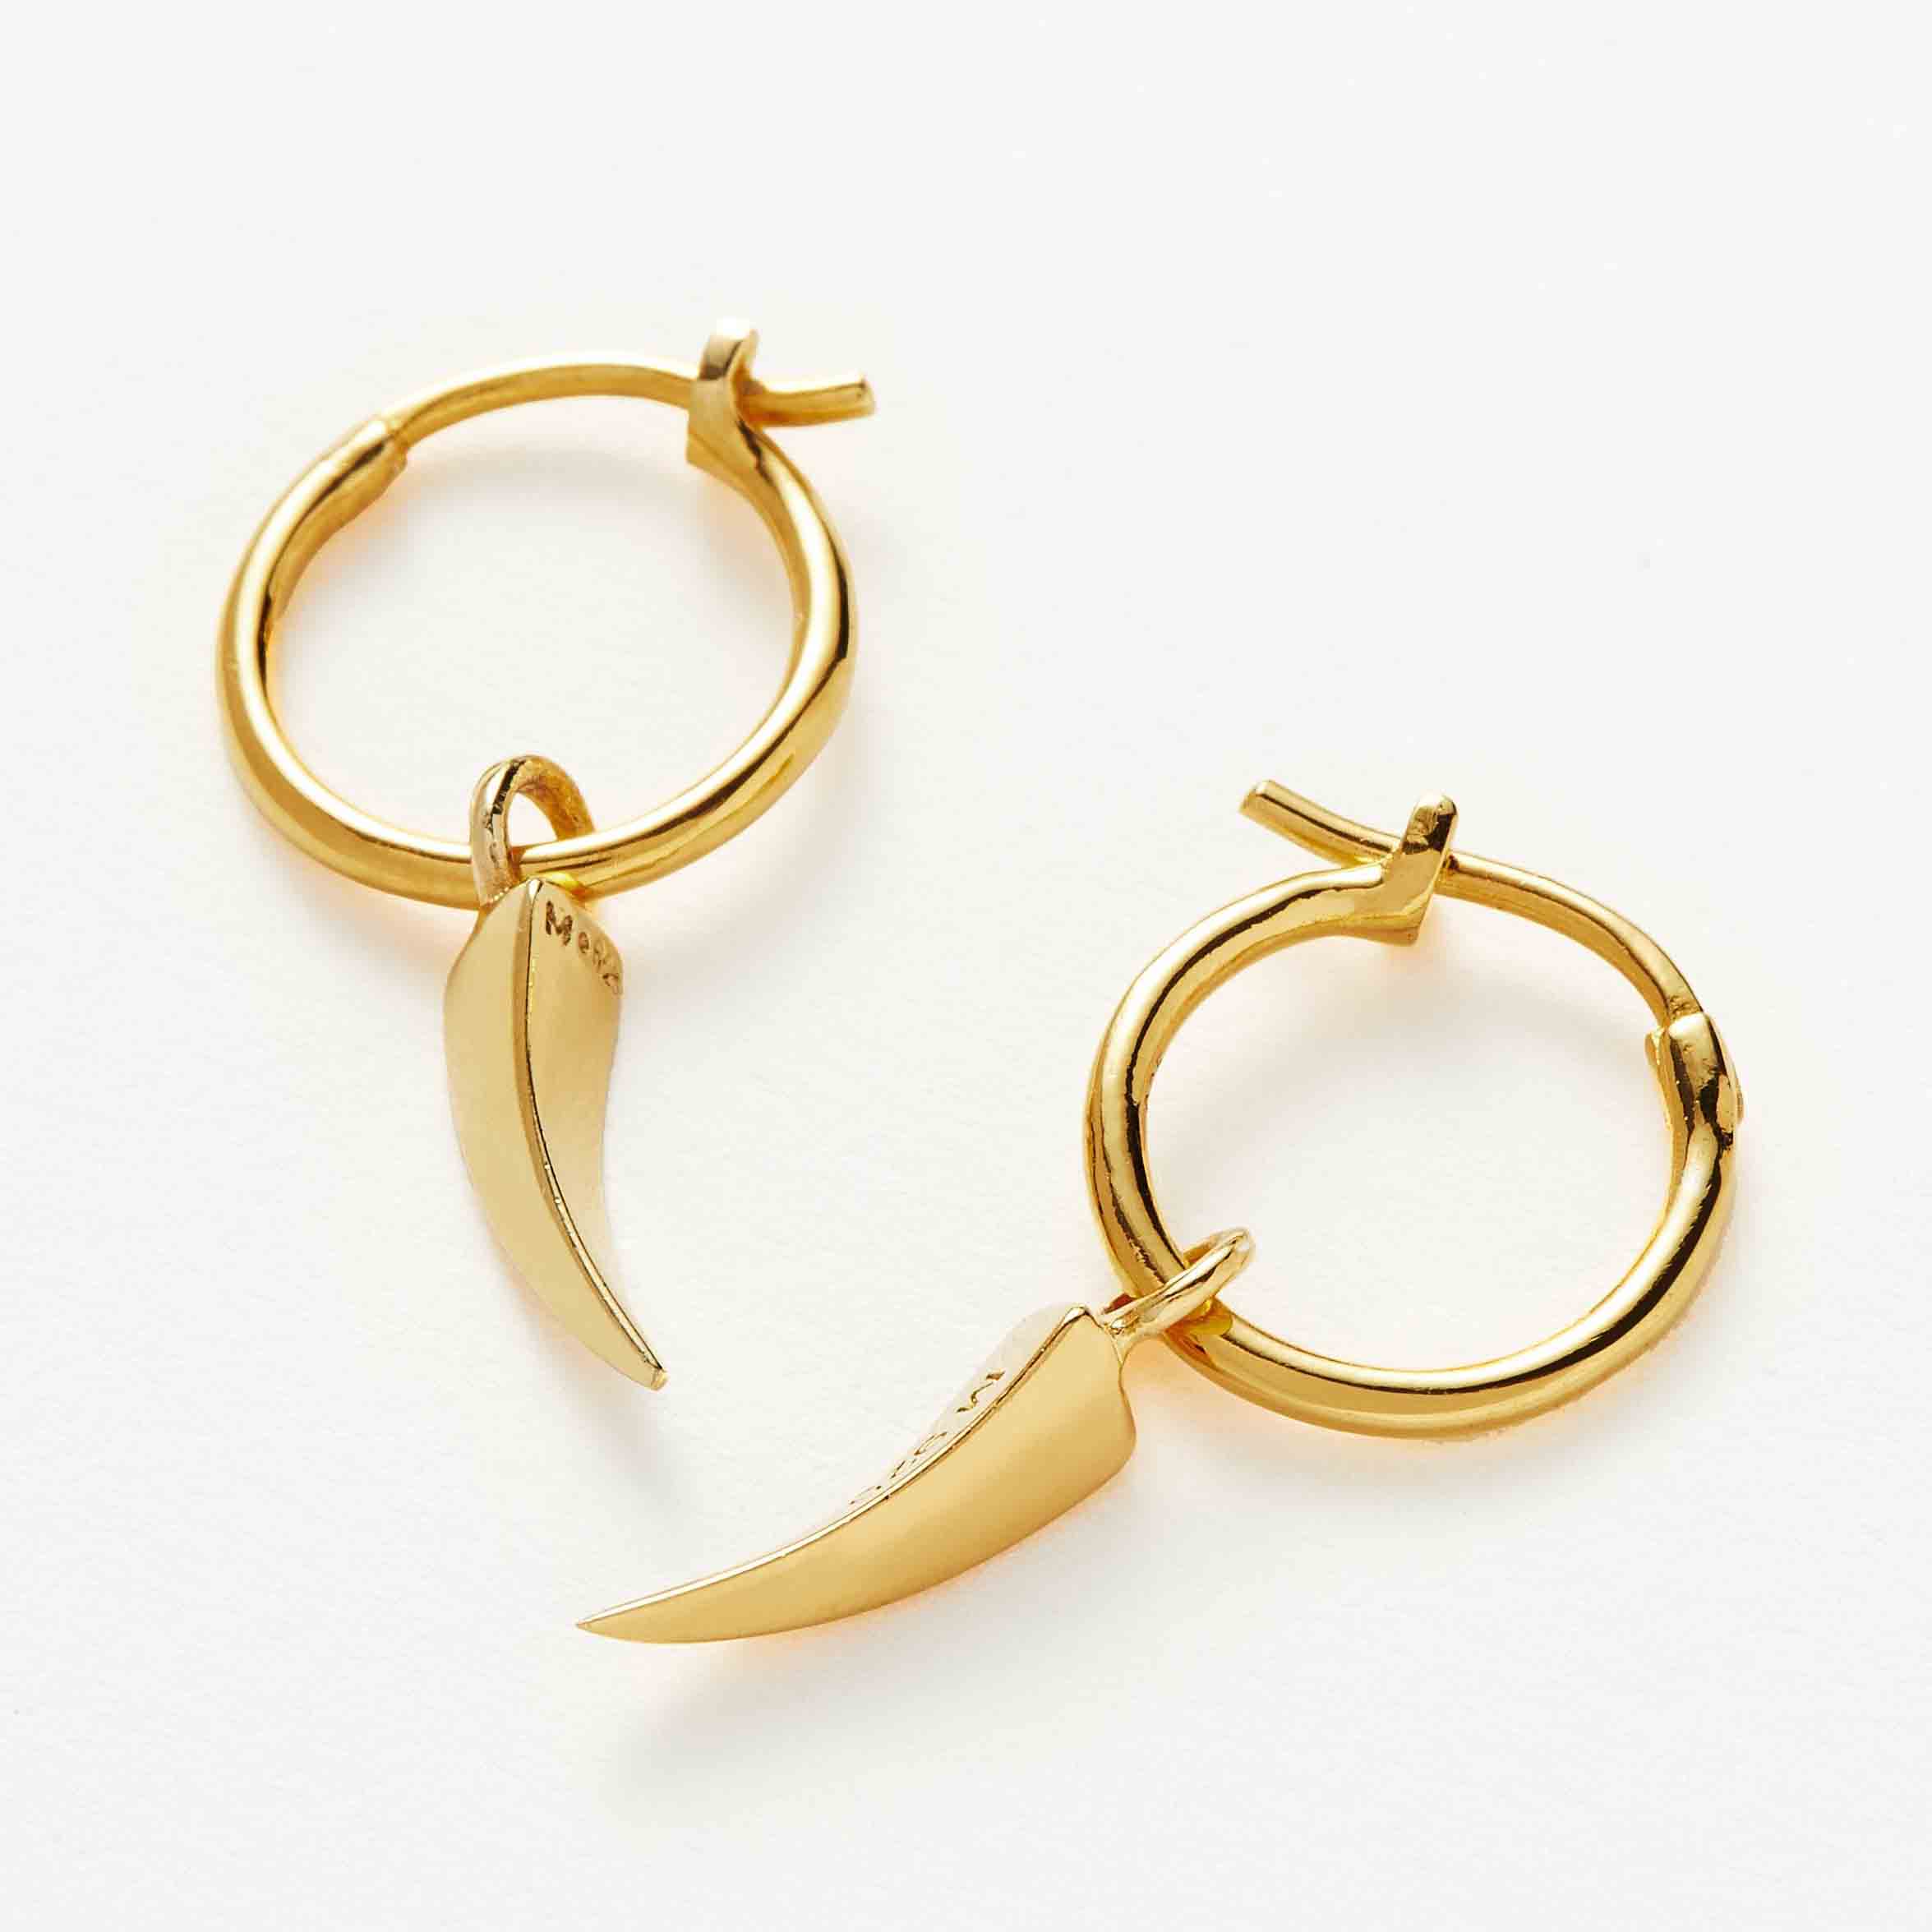 18k gold jewelry manufacturers OEM ODM 925 silver hoop earring in gold vermeil